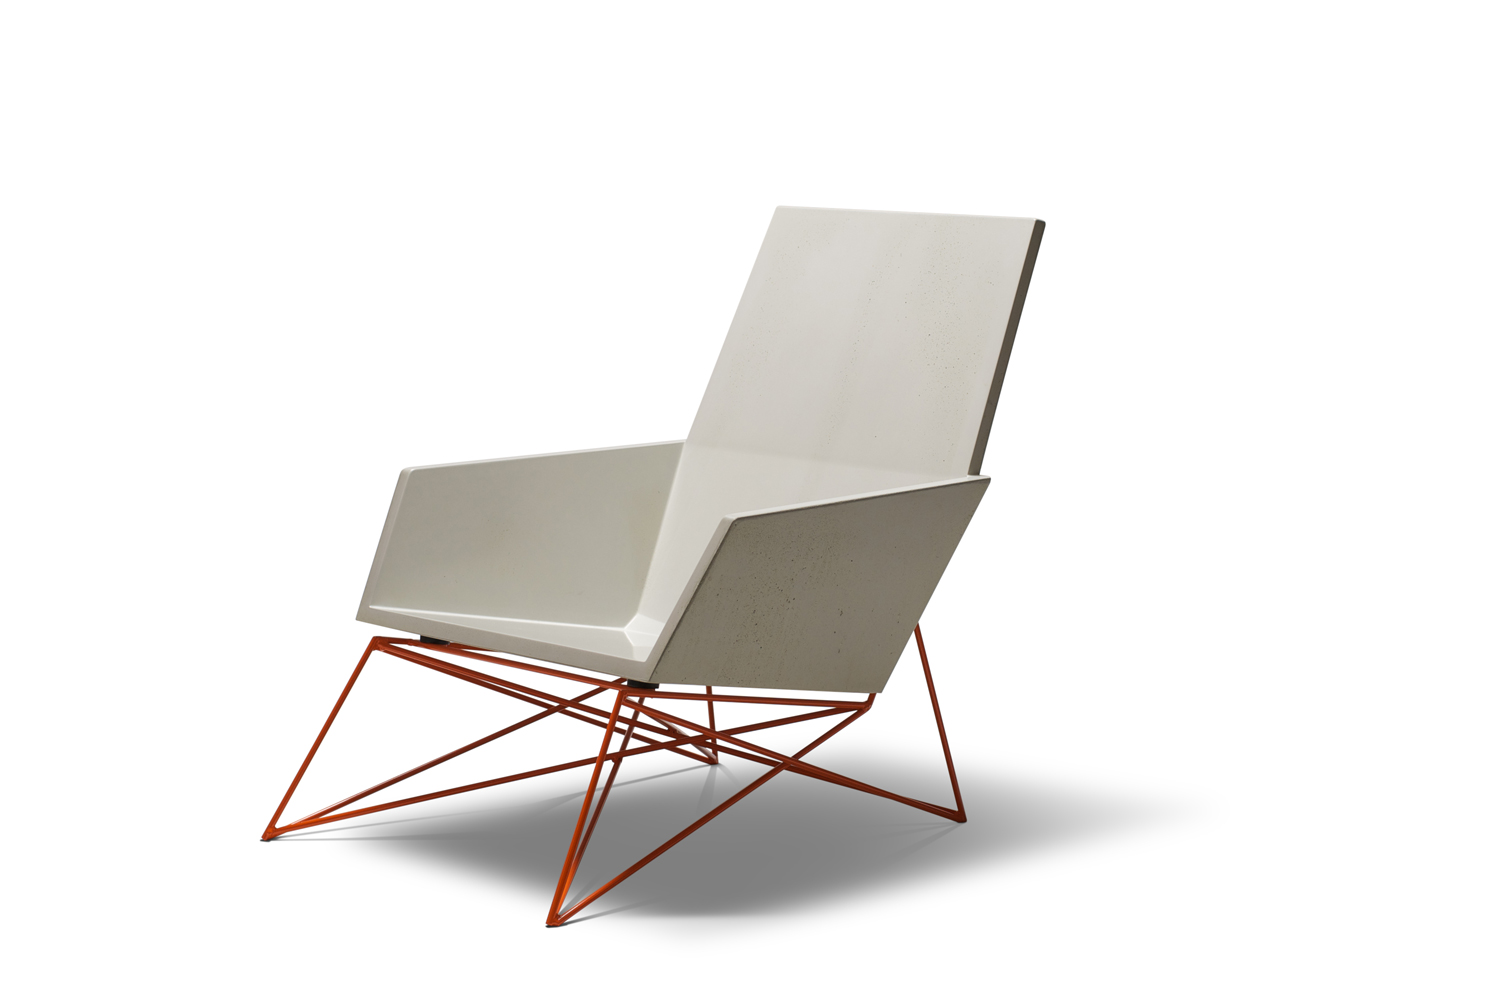 Hard Goods Concrete and Steel Modern Muskoka Outdoor Chair